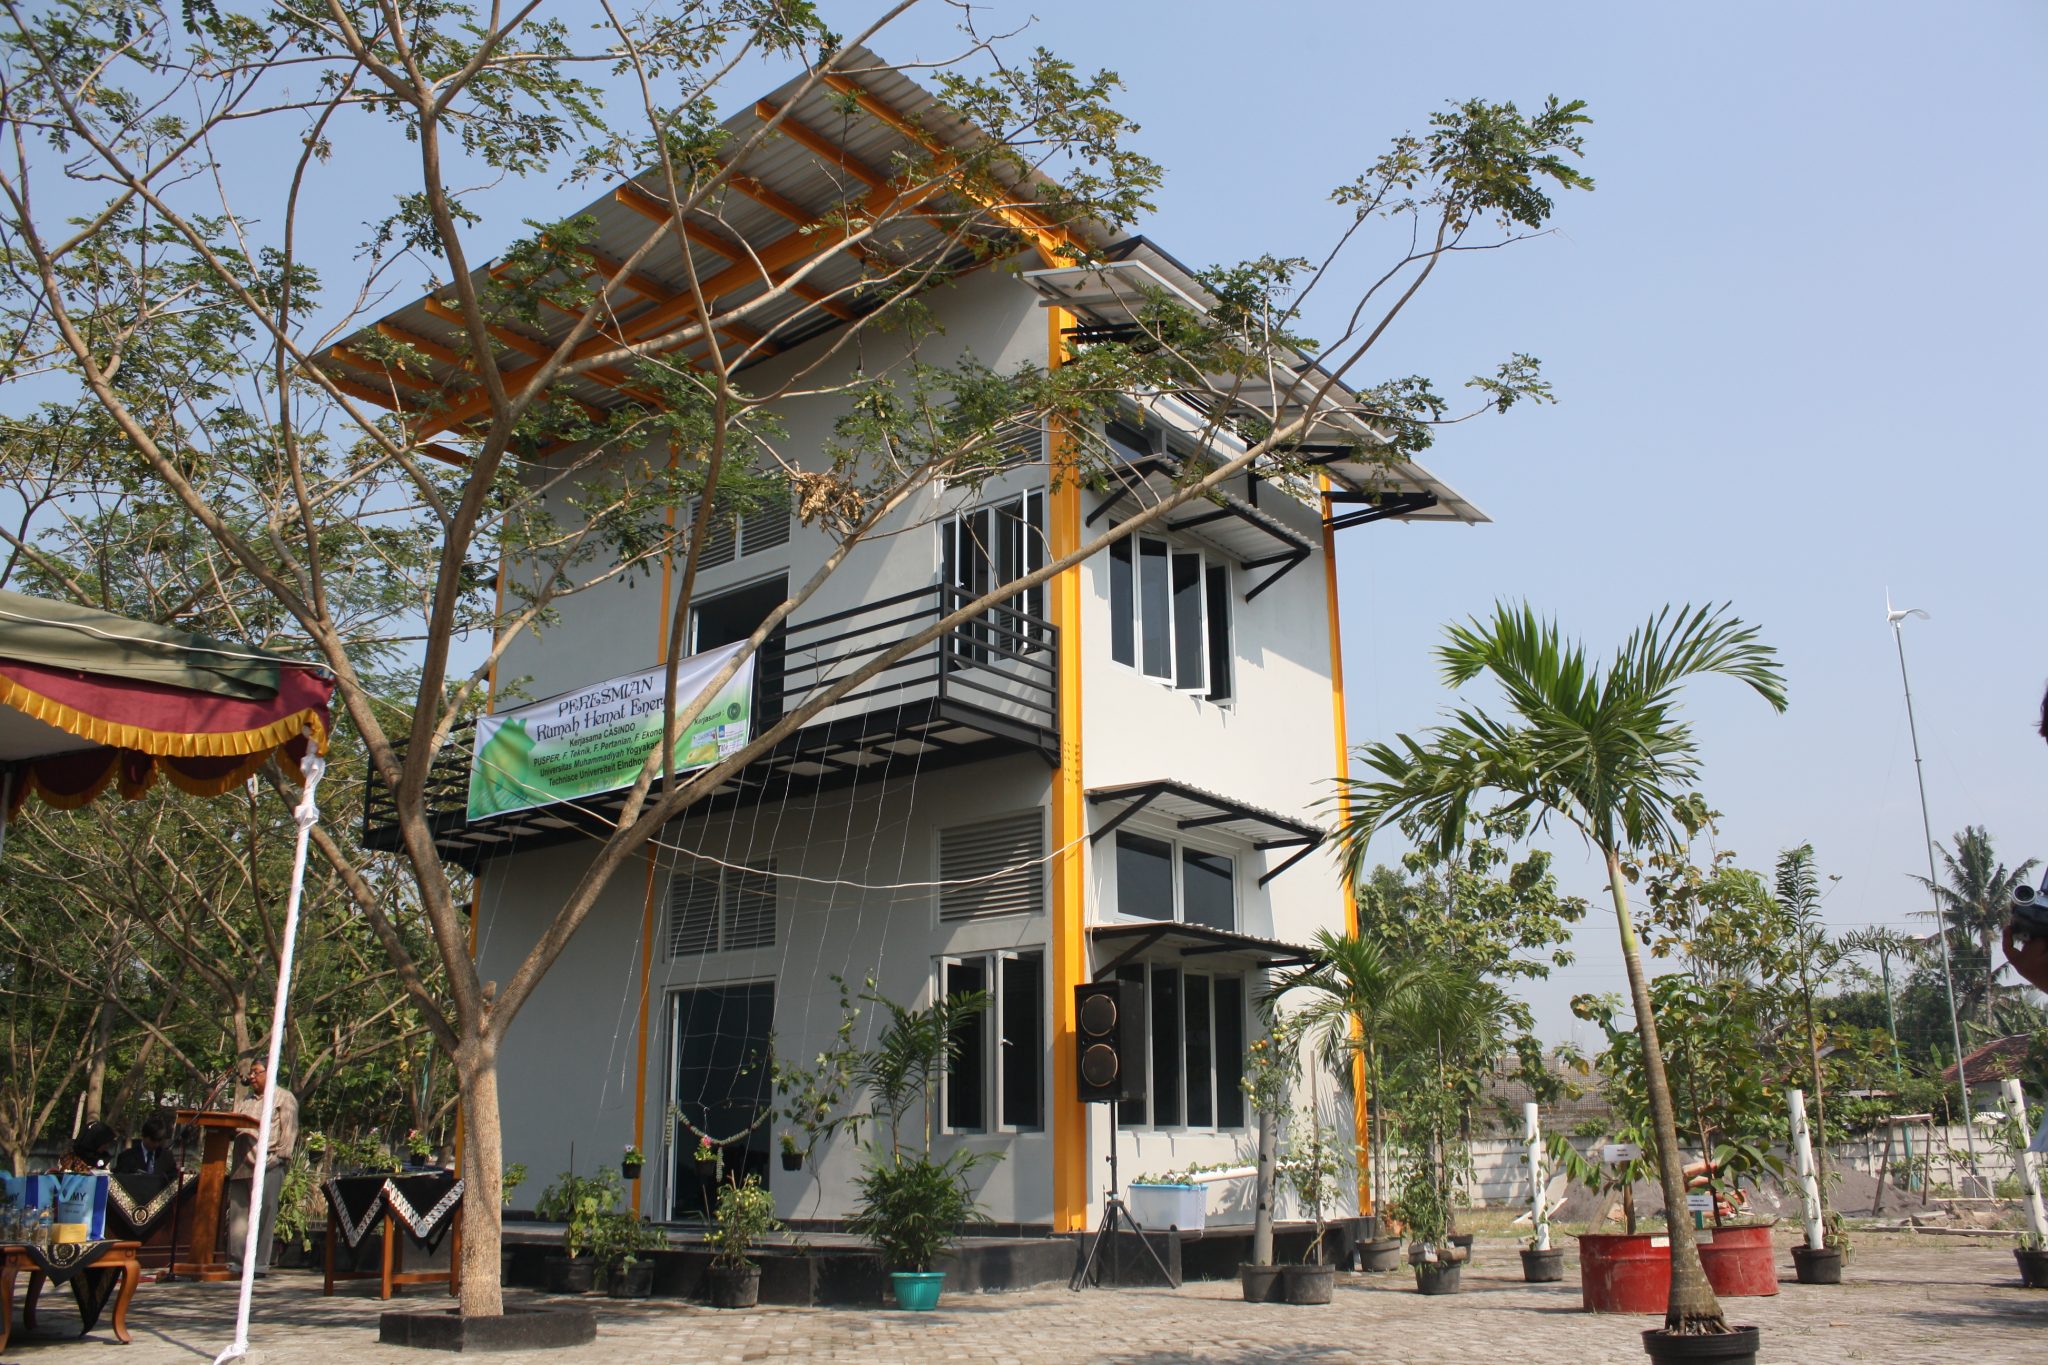 Rumah hemat energi rancangan Universitas Muhammadiyah Yogyakarta | umy.ac.id